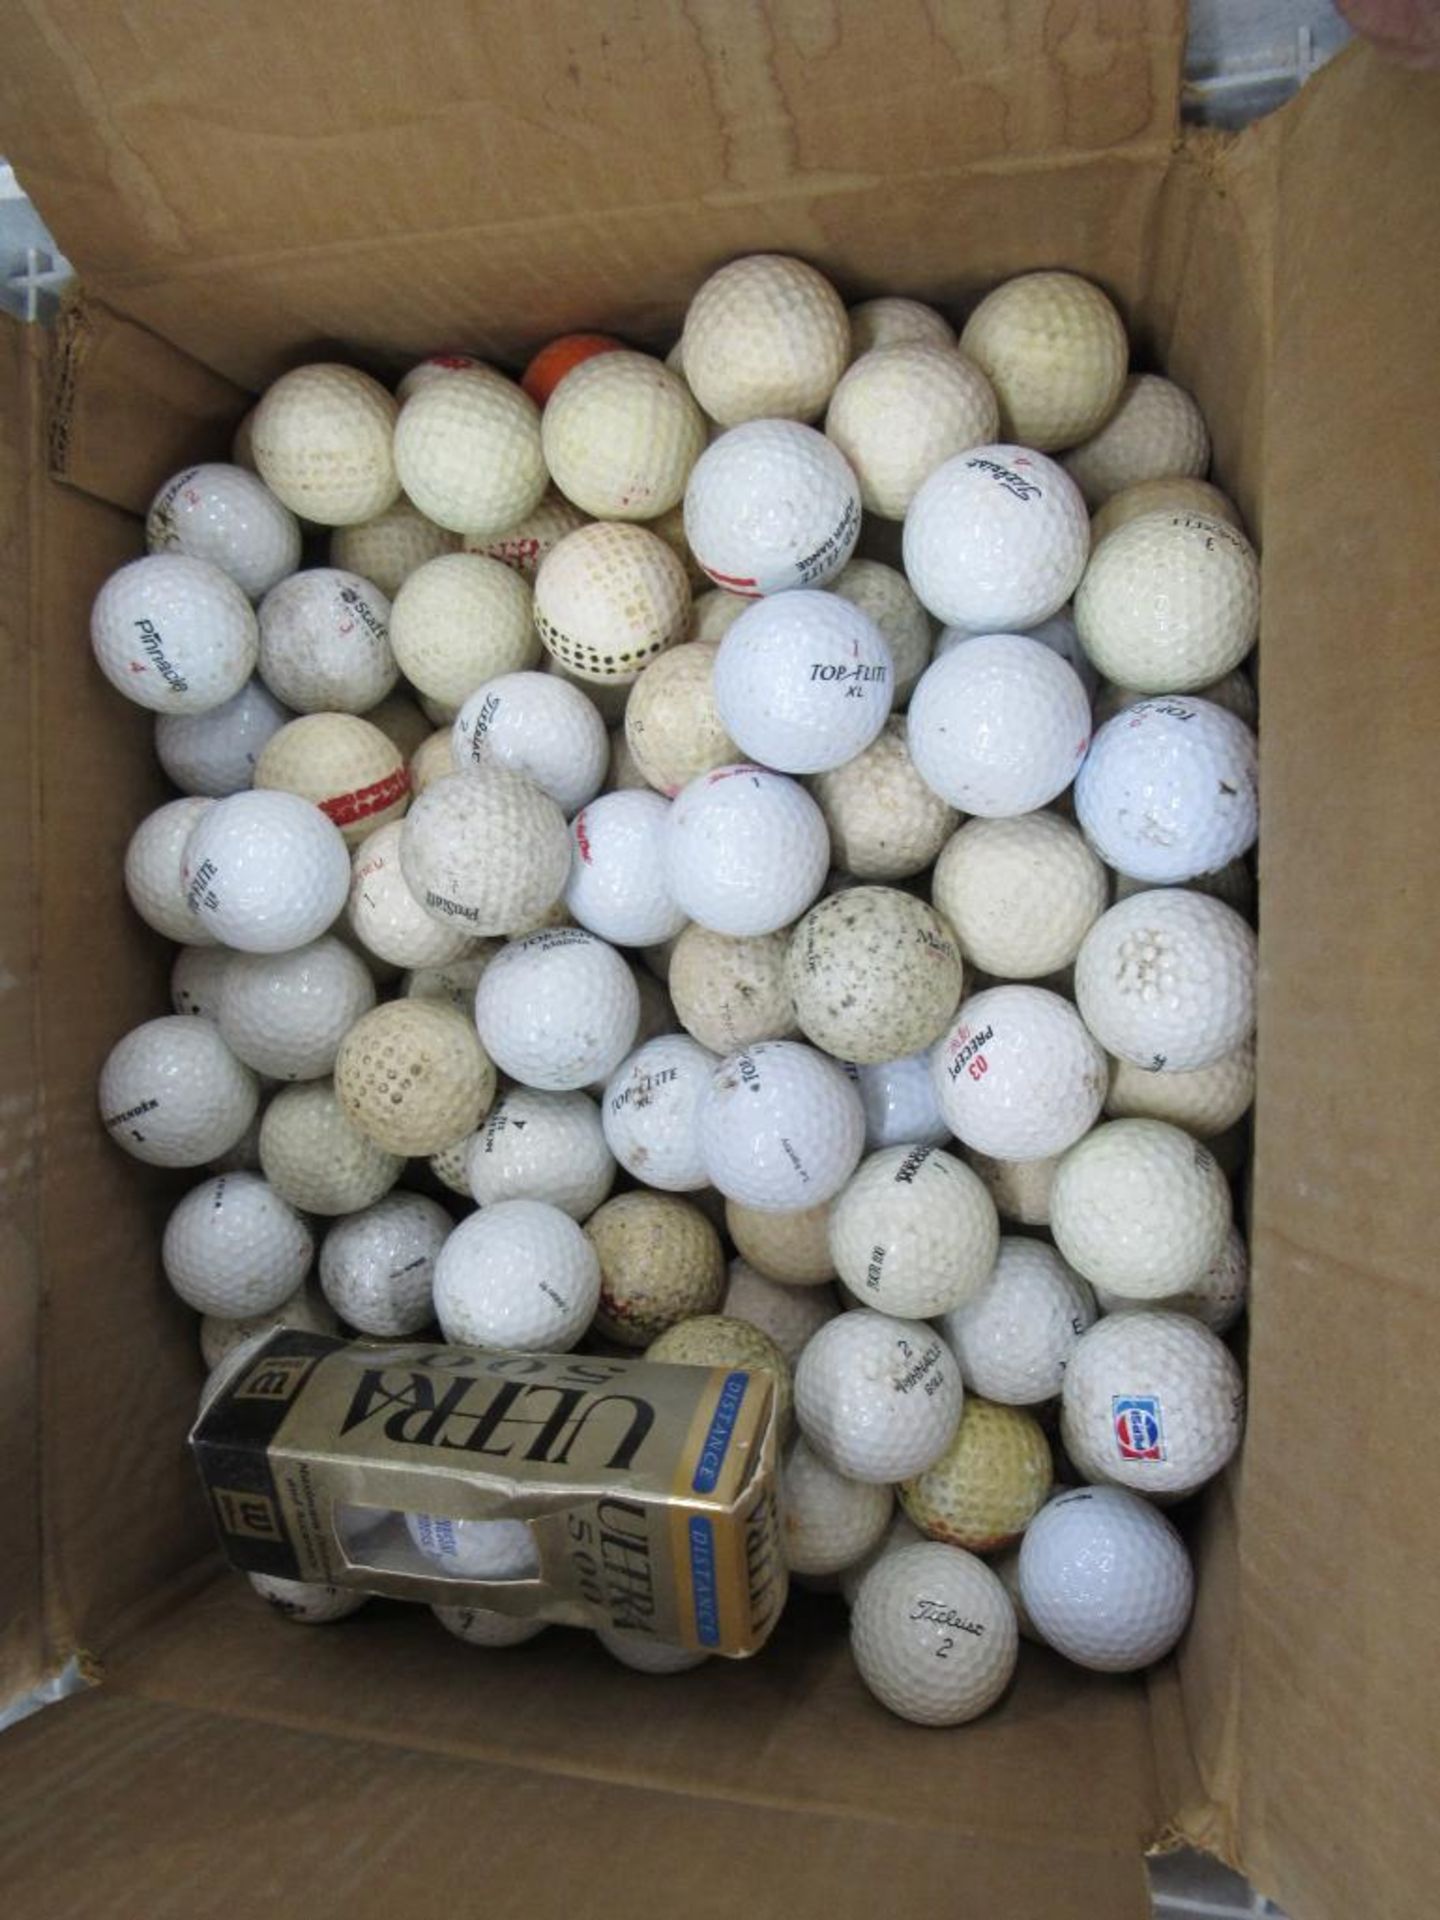 Crate of Golf Balls